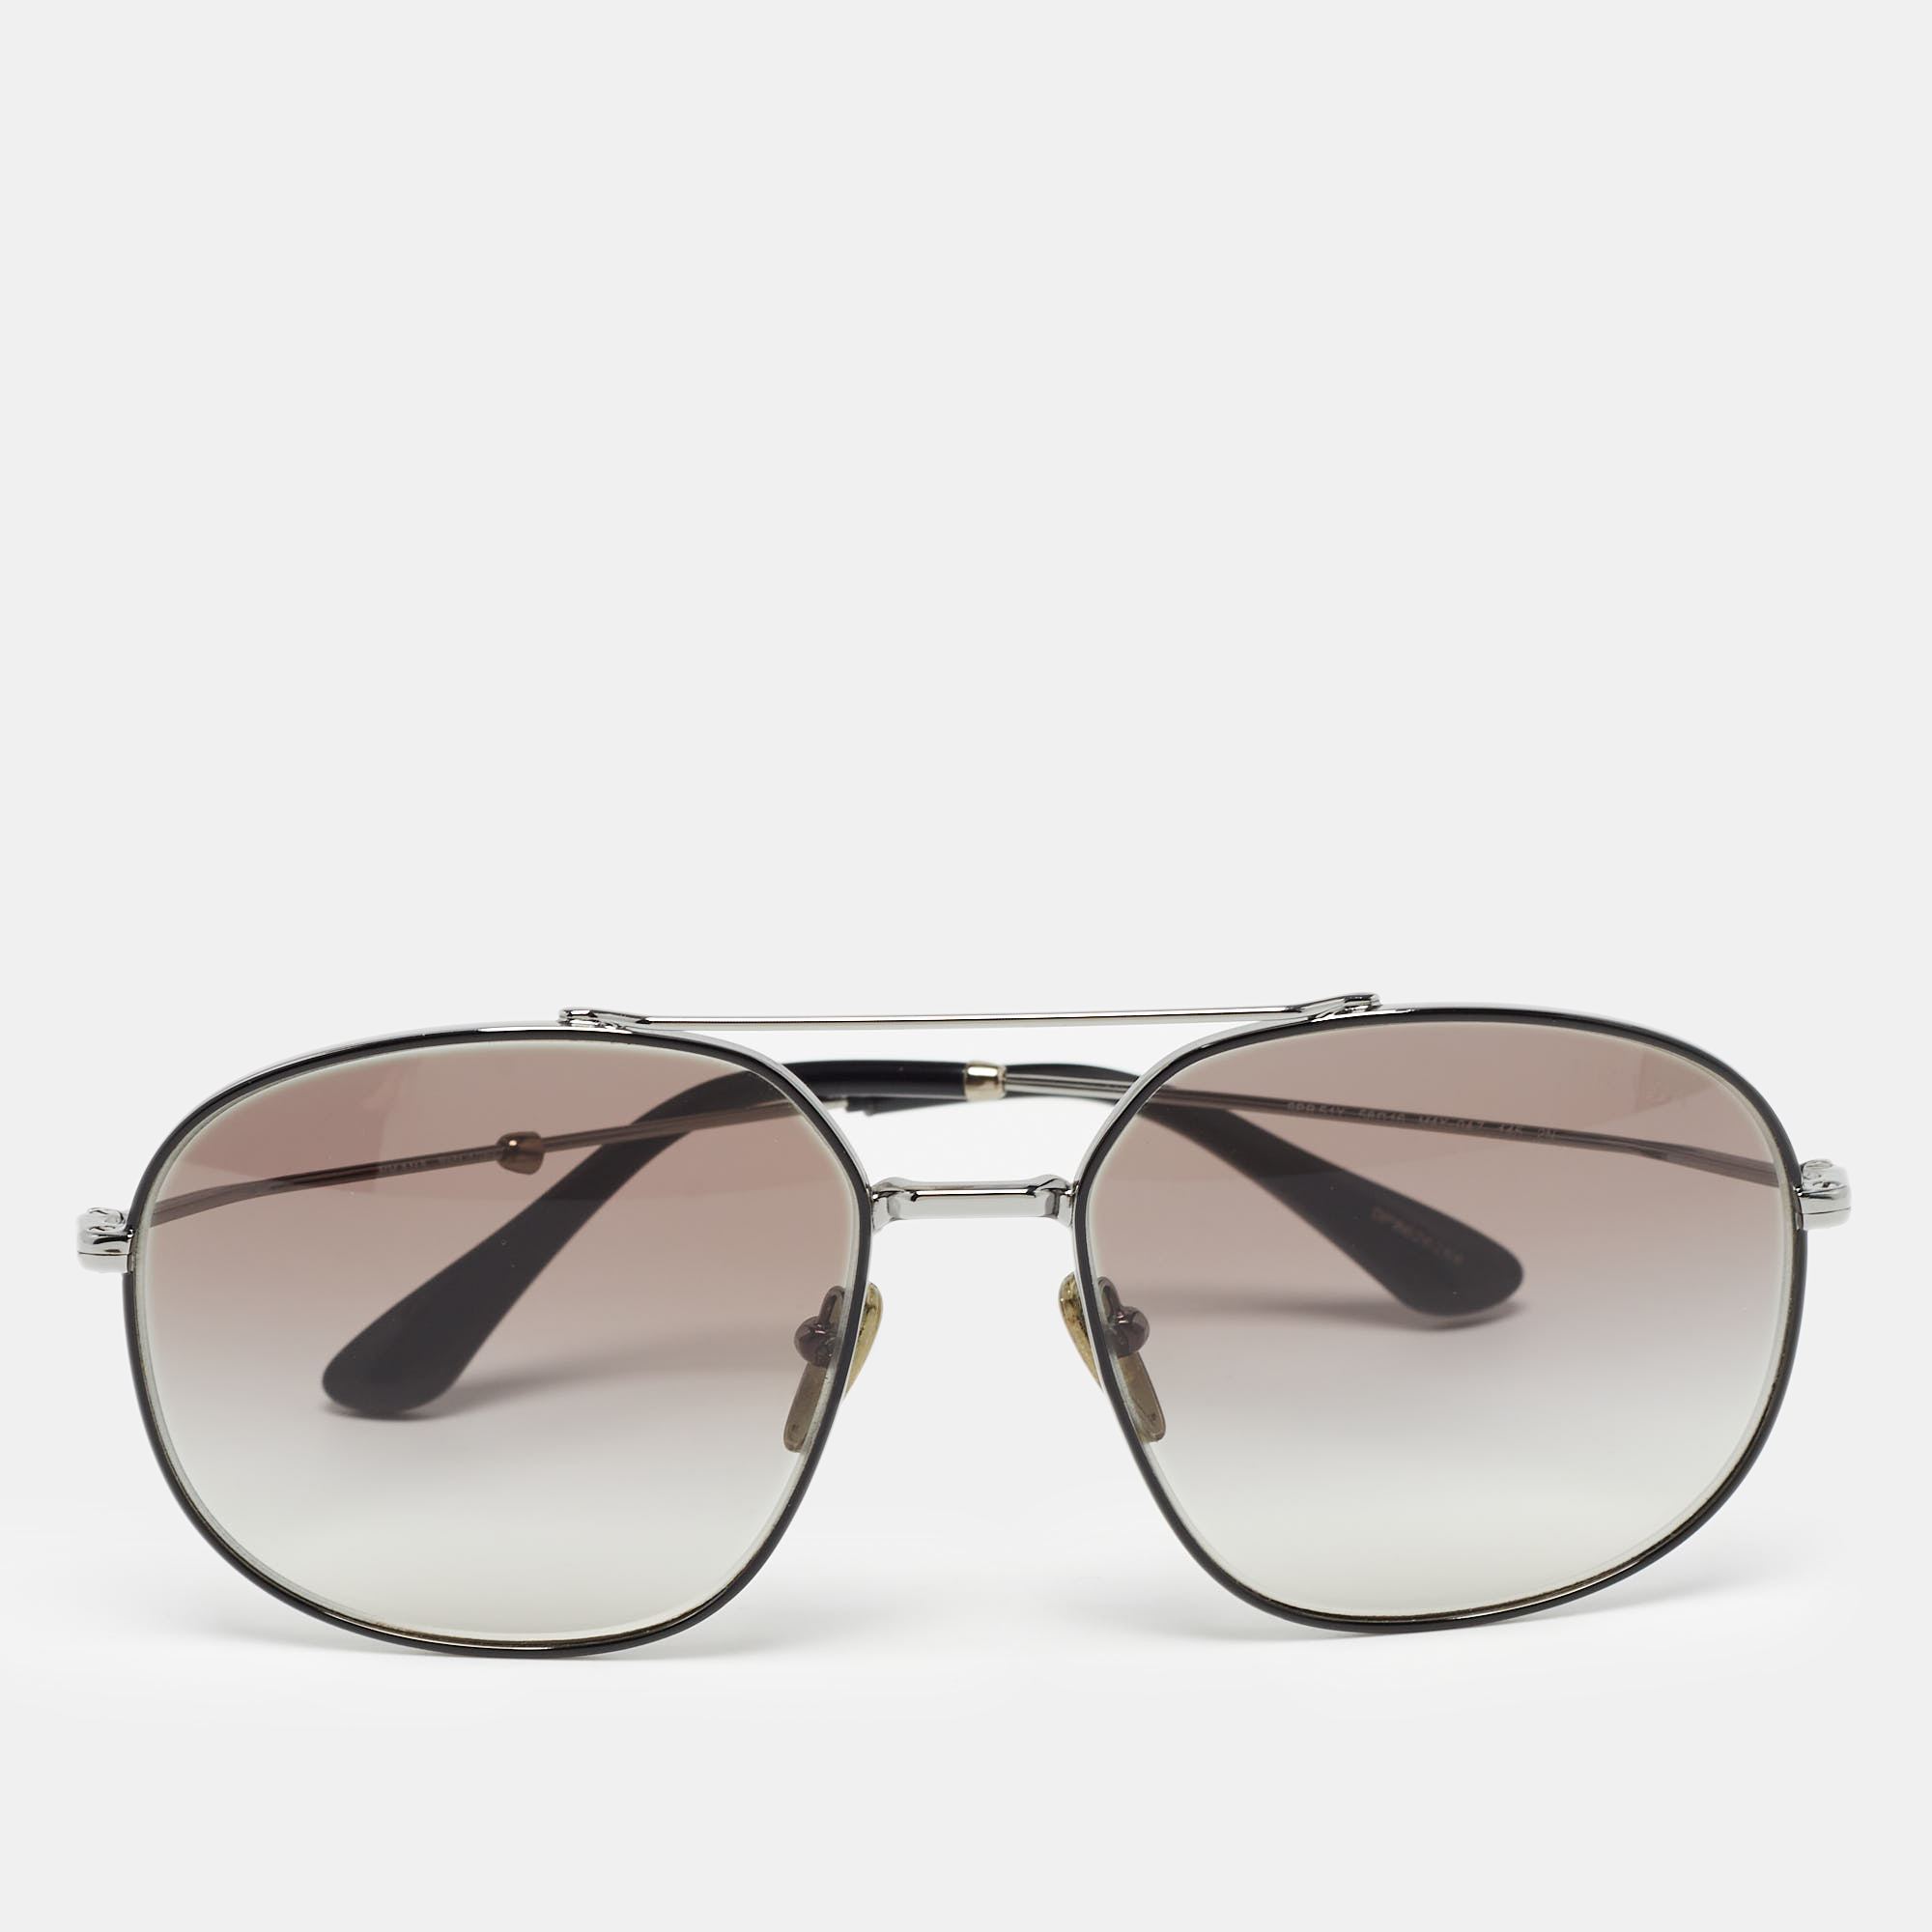 Pre-owned Prada Black/grey Gradient Spr 51y Aviator Sunglasses